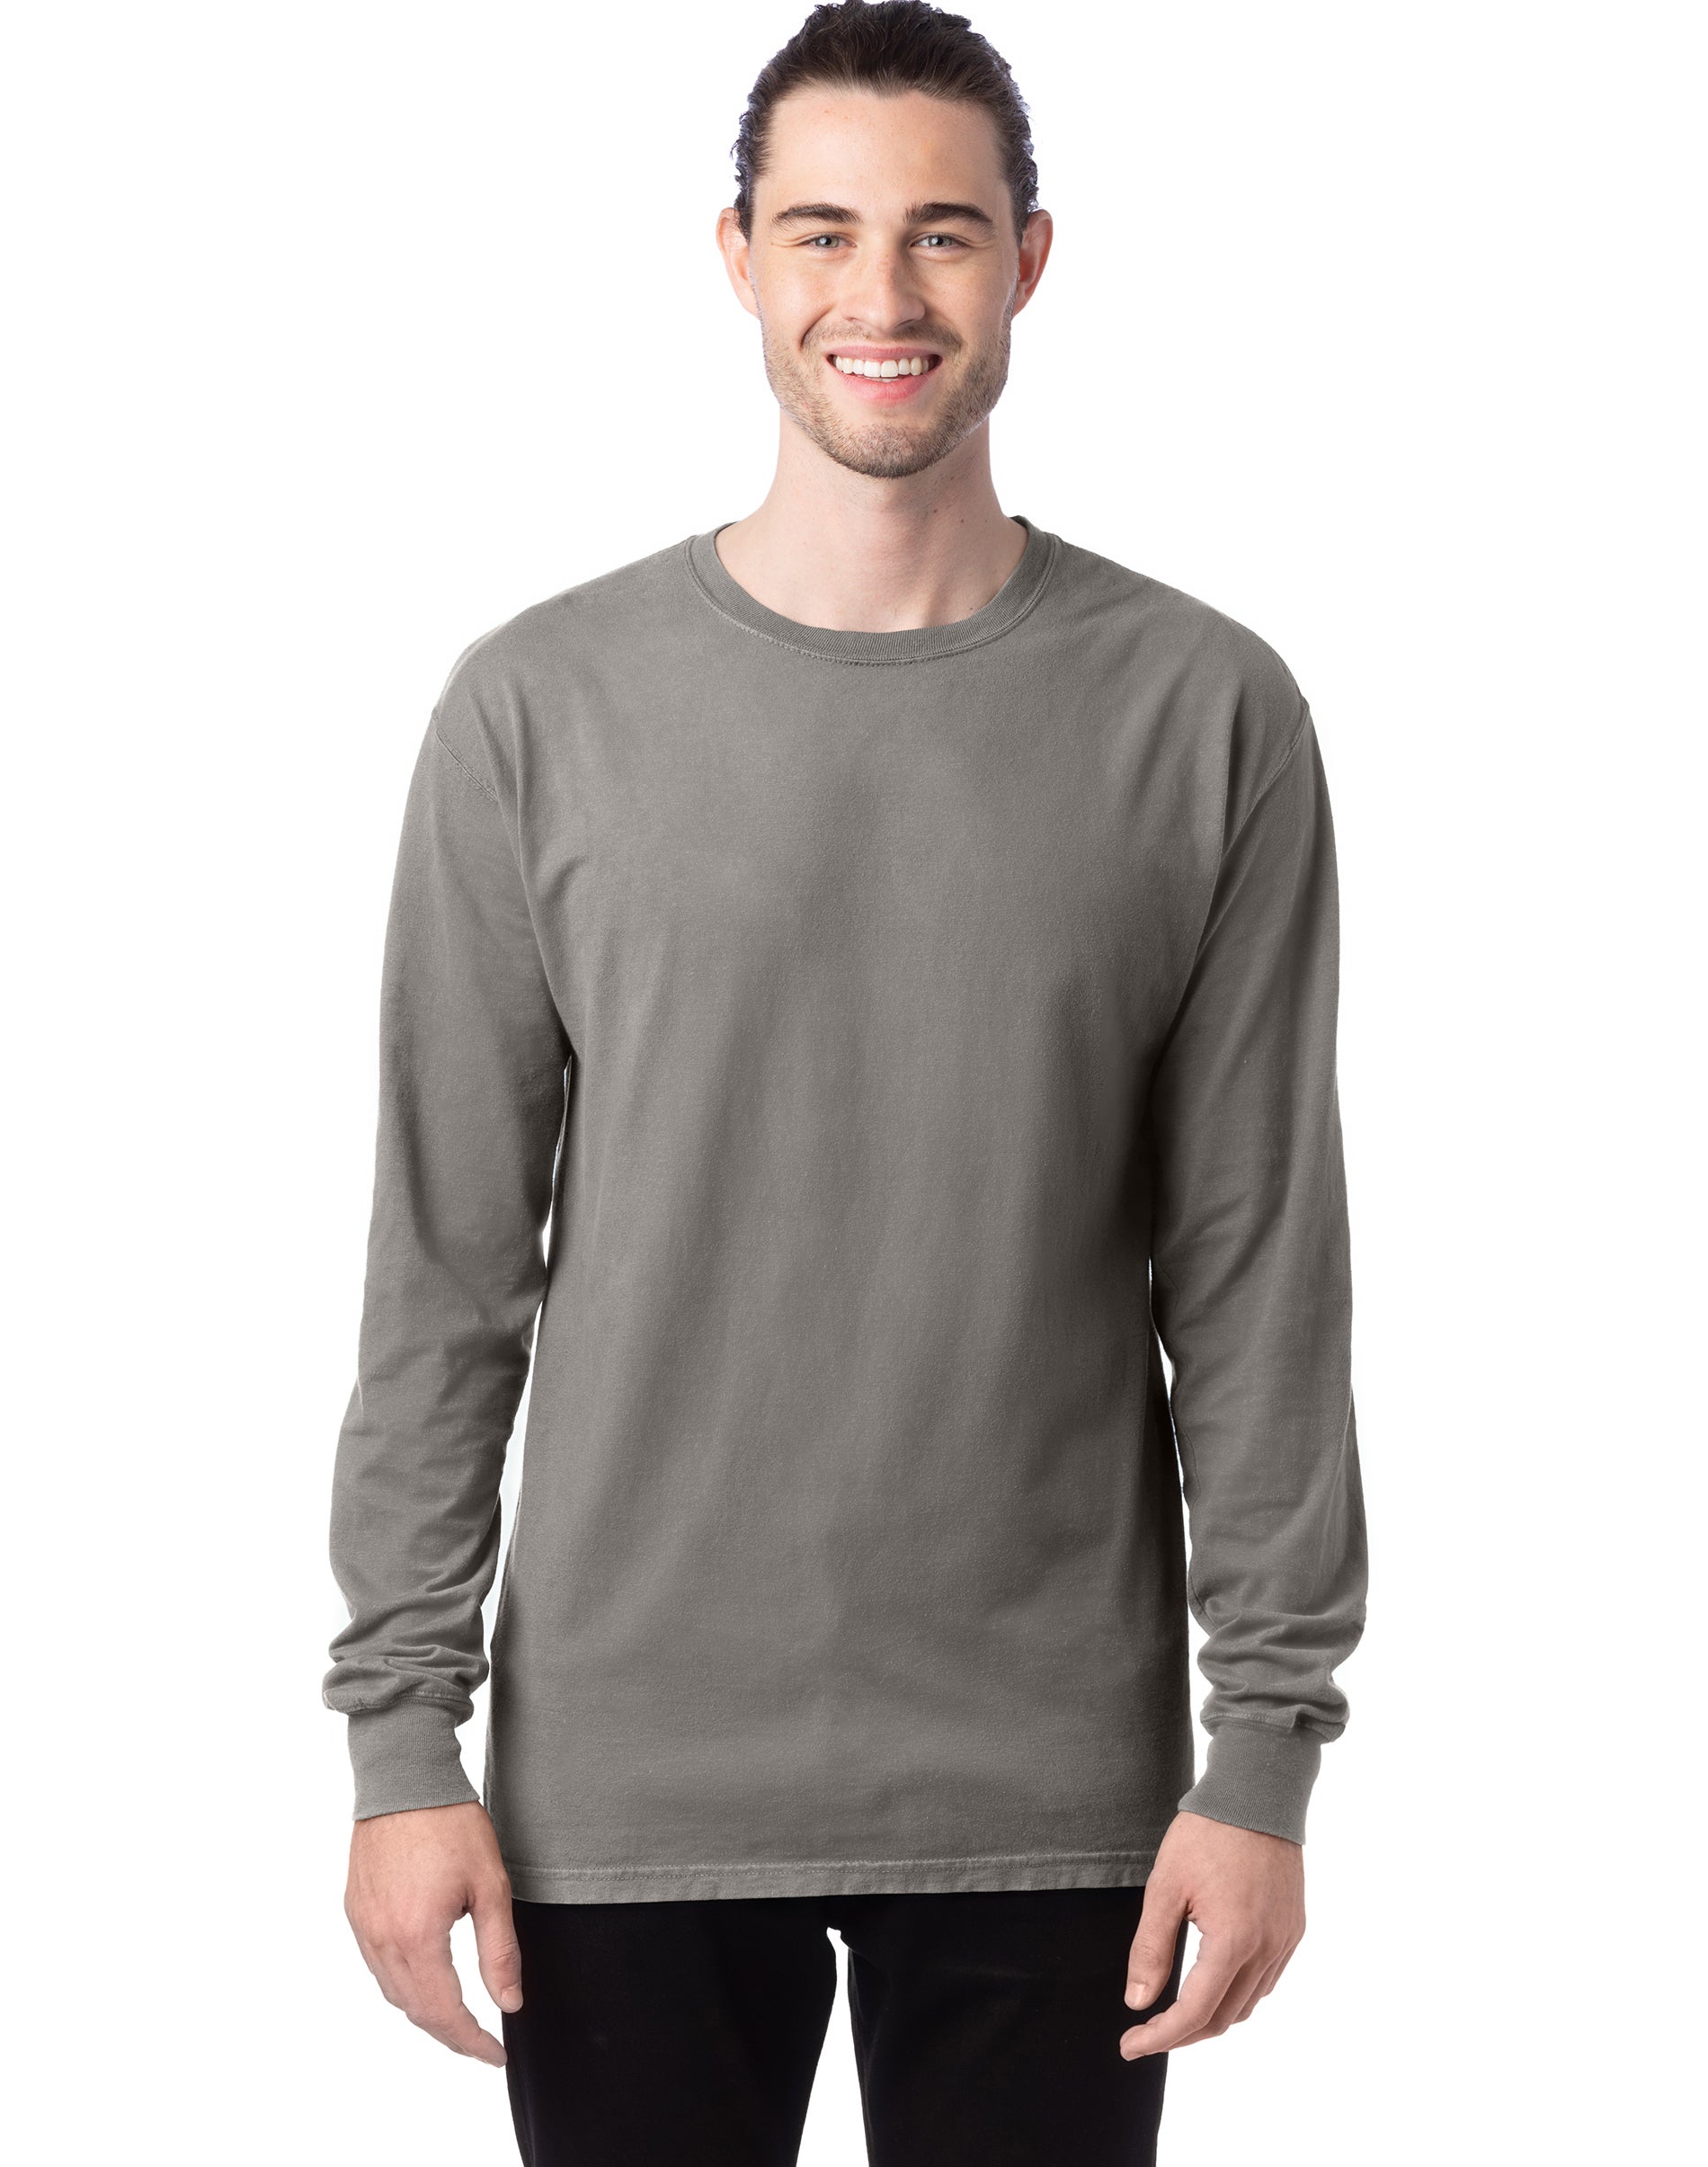 Hanes Originals Mens Garment Dyed Long-Sleeve T-Shirt